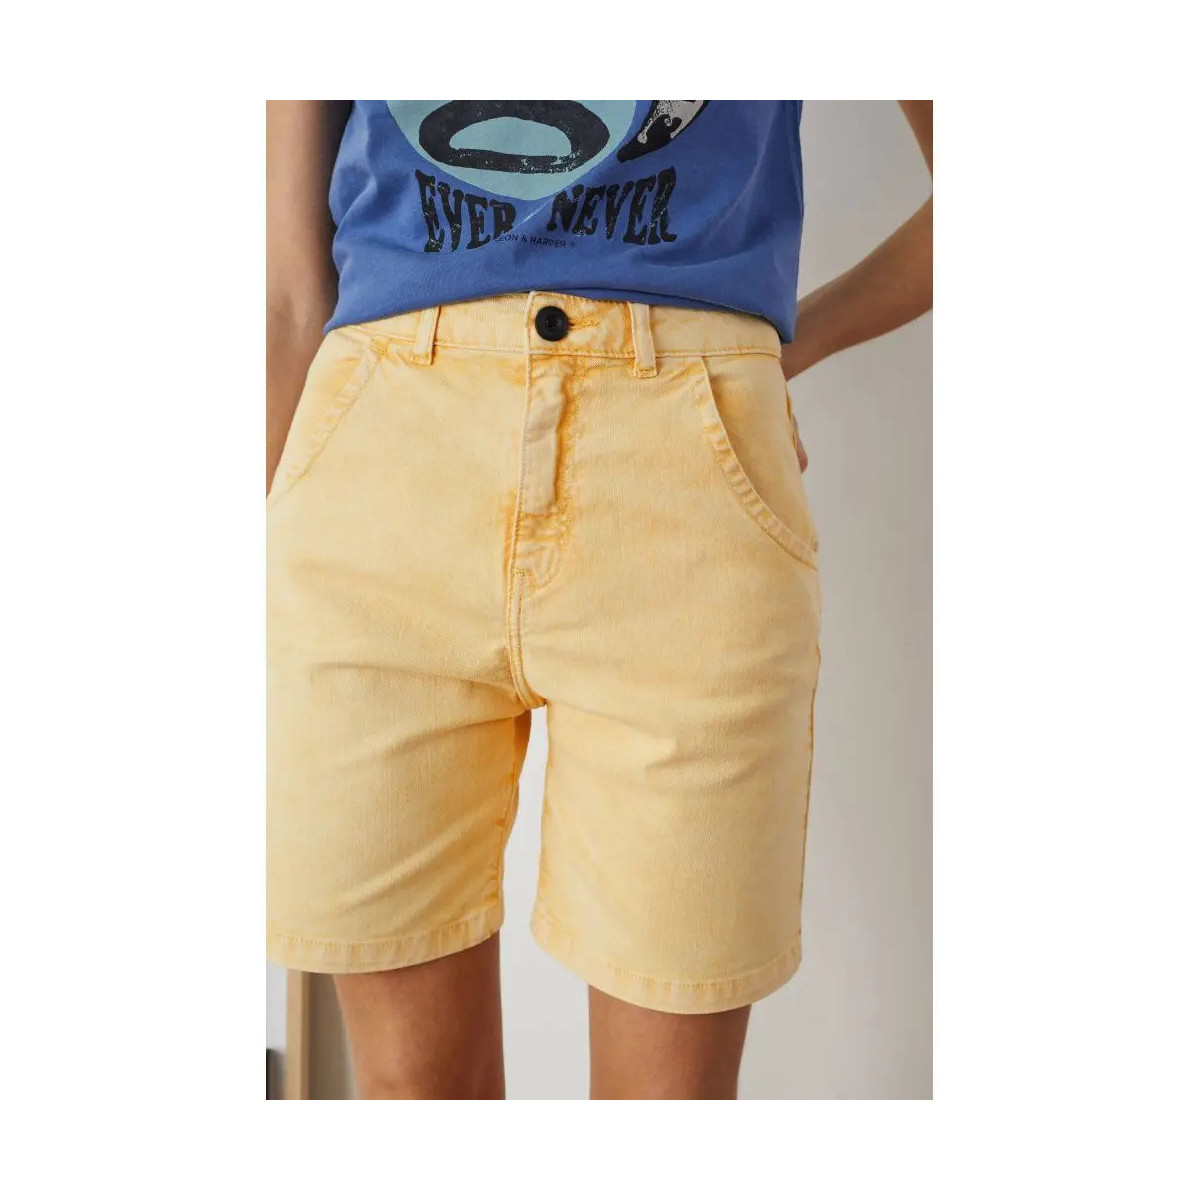 textil Mujer Shorts / Bermudas Leon & Harper Pantalones cortos Quatty Mujer - Amarillo Amarillo